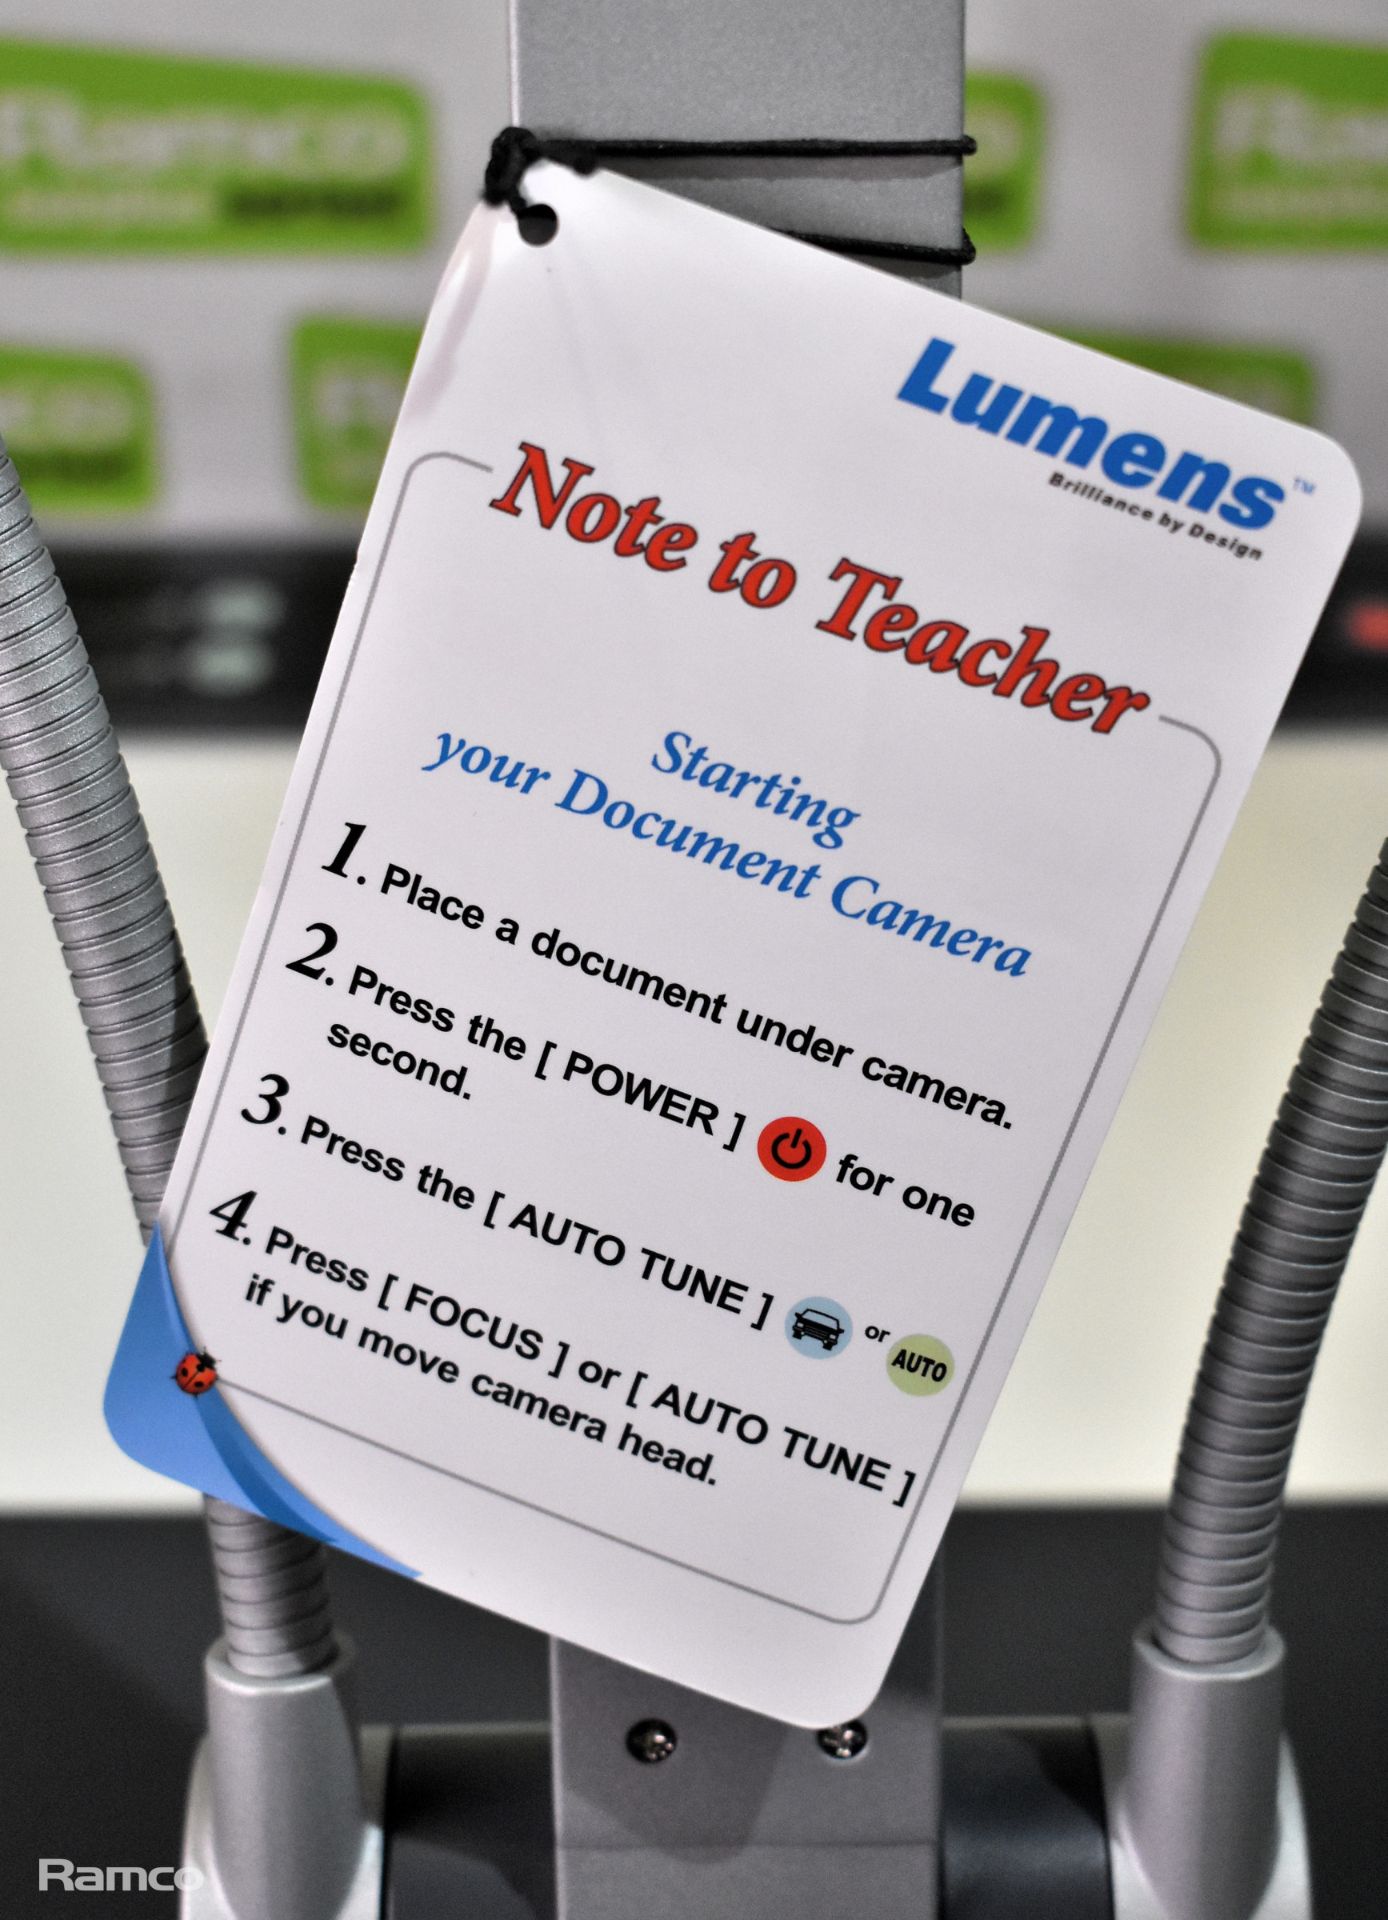 Lumens PS752 desktop document camera - Bild 6 aus 10